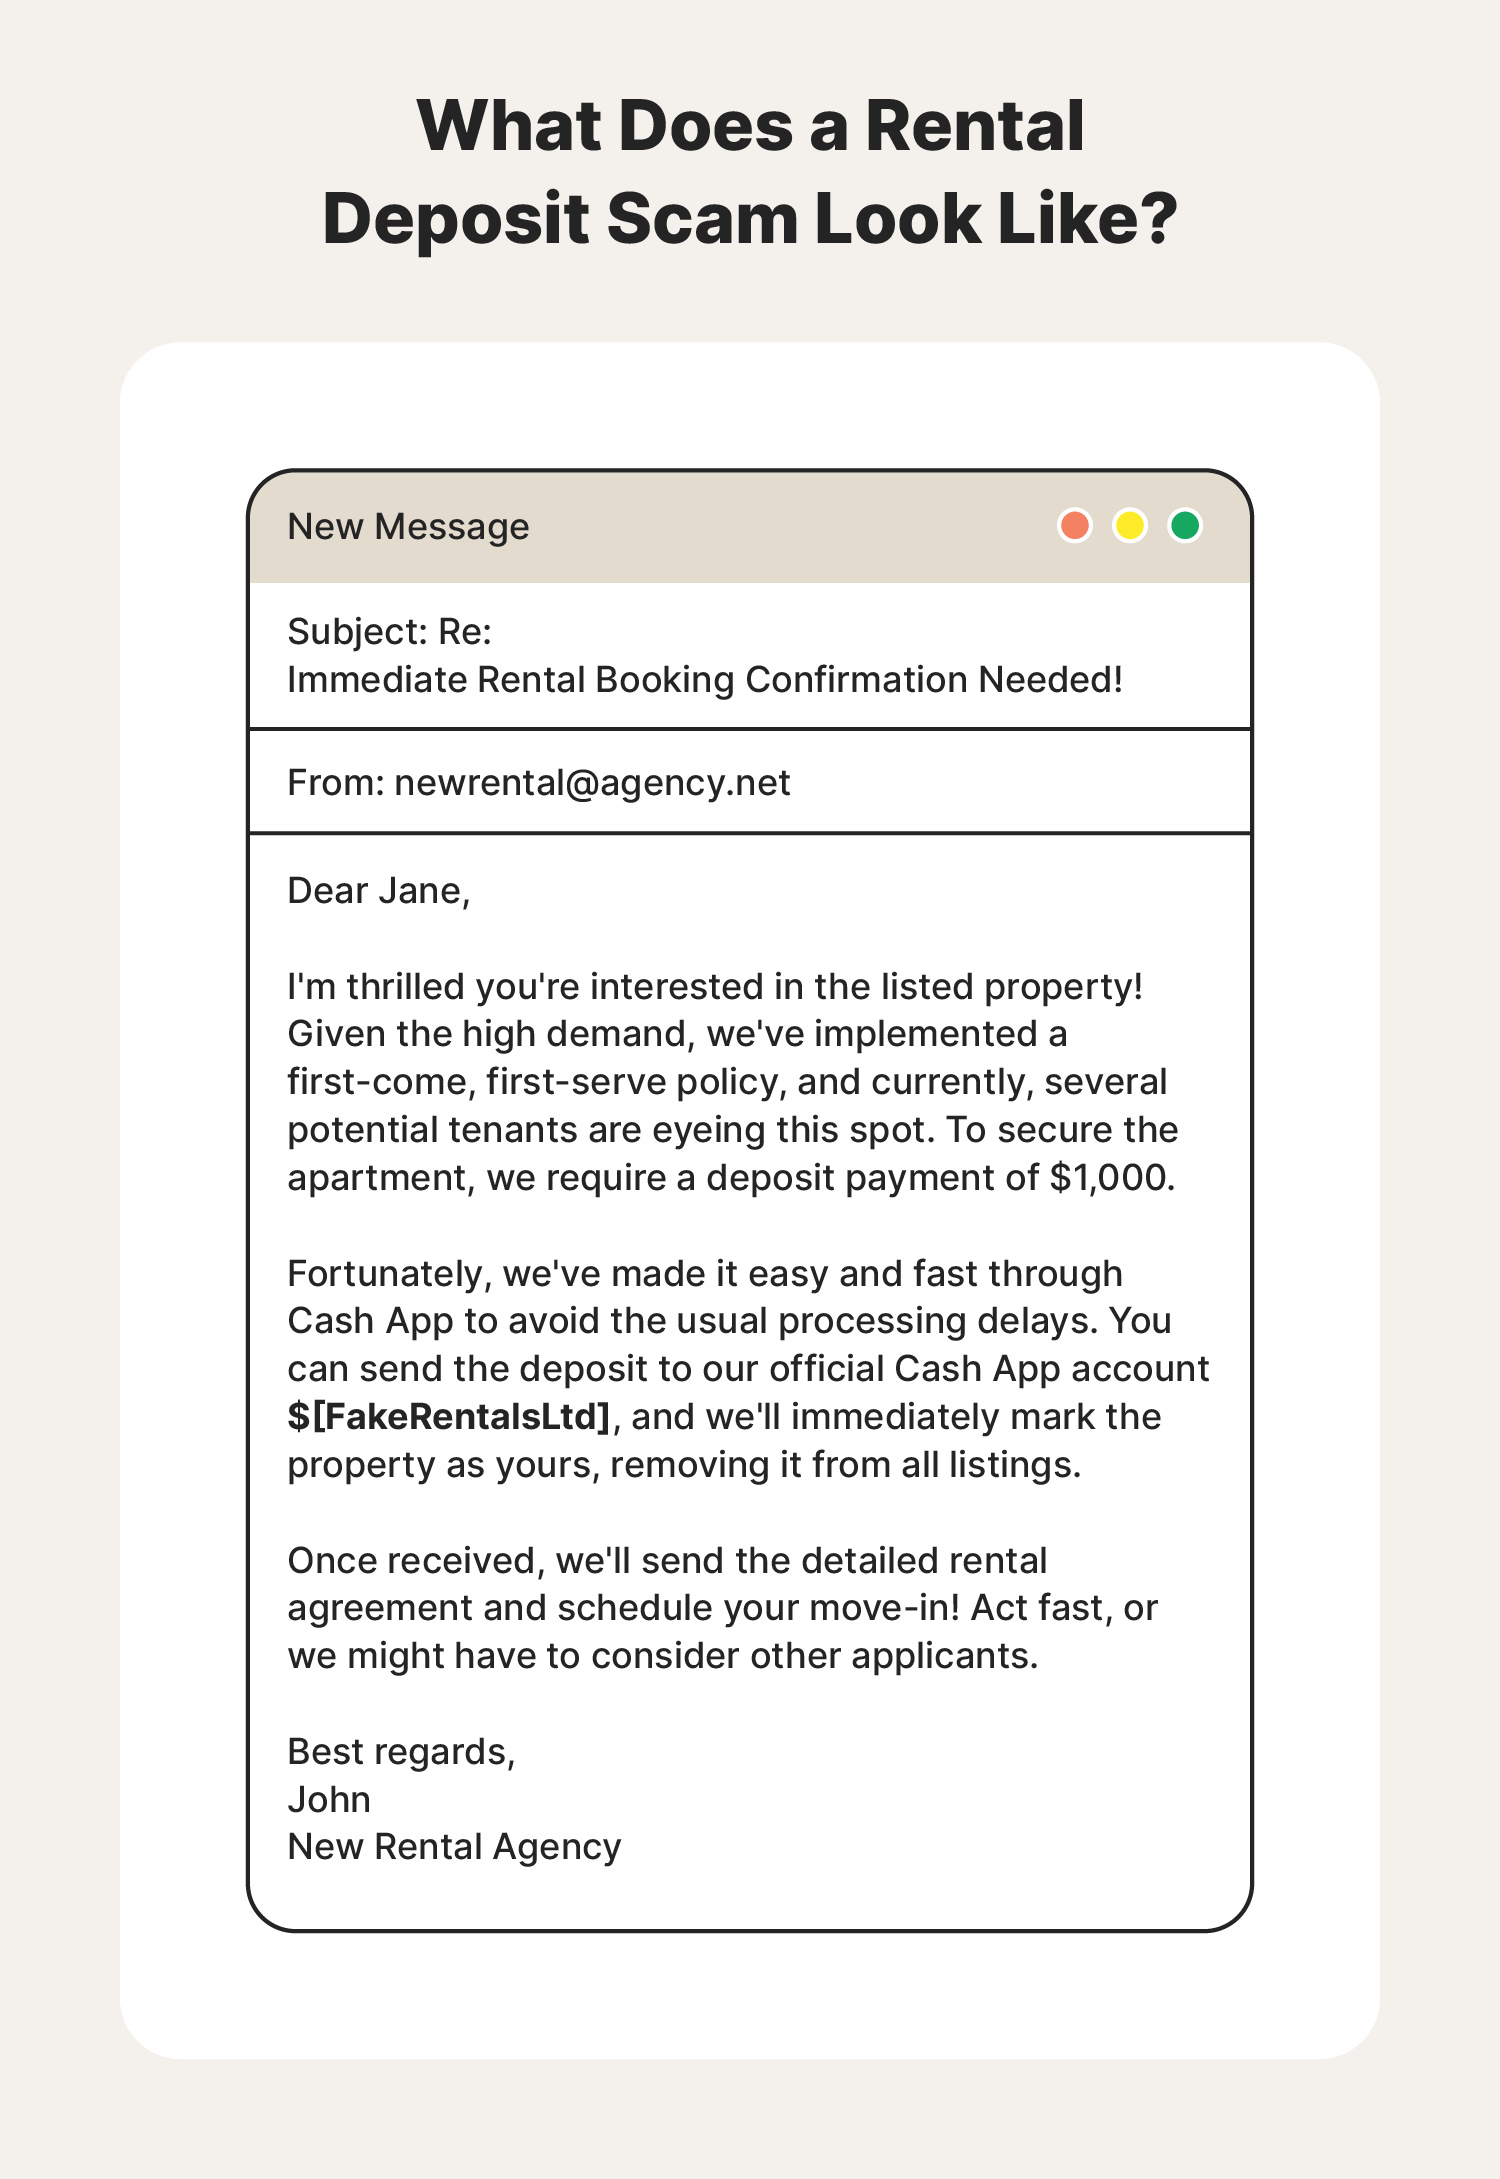 A screenshot shows a common Cash App rental deposit scam.